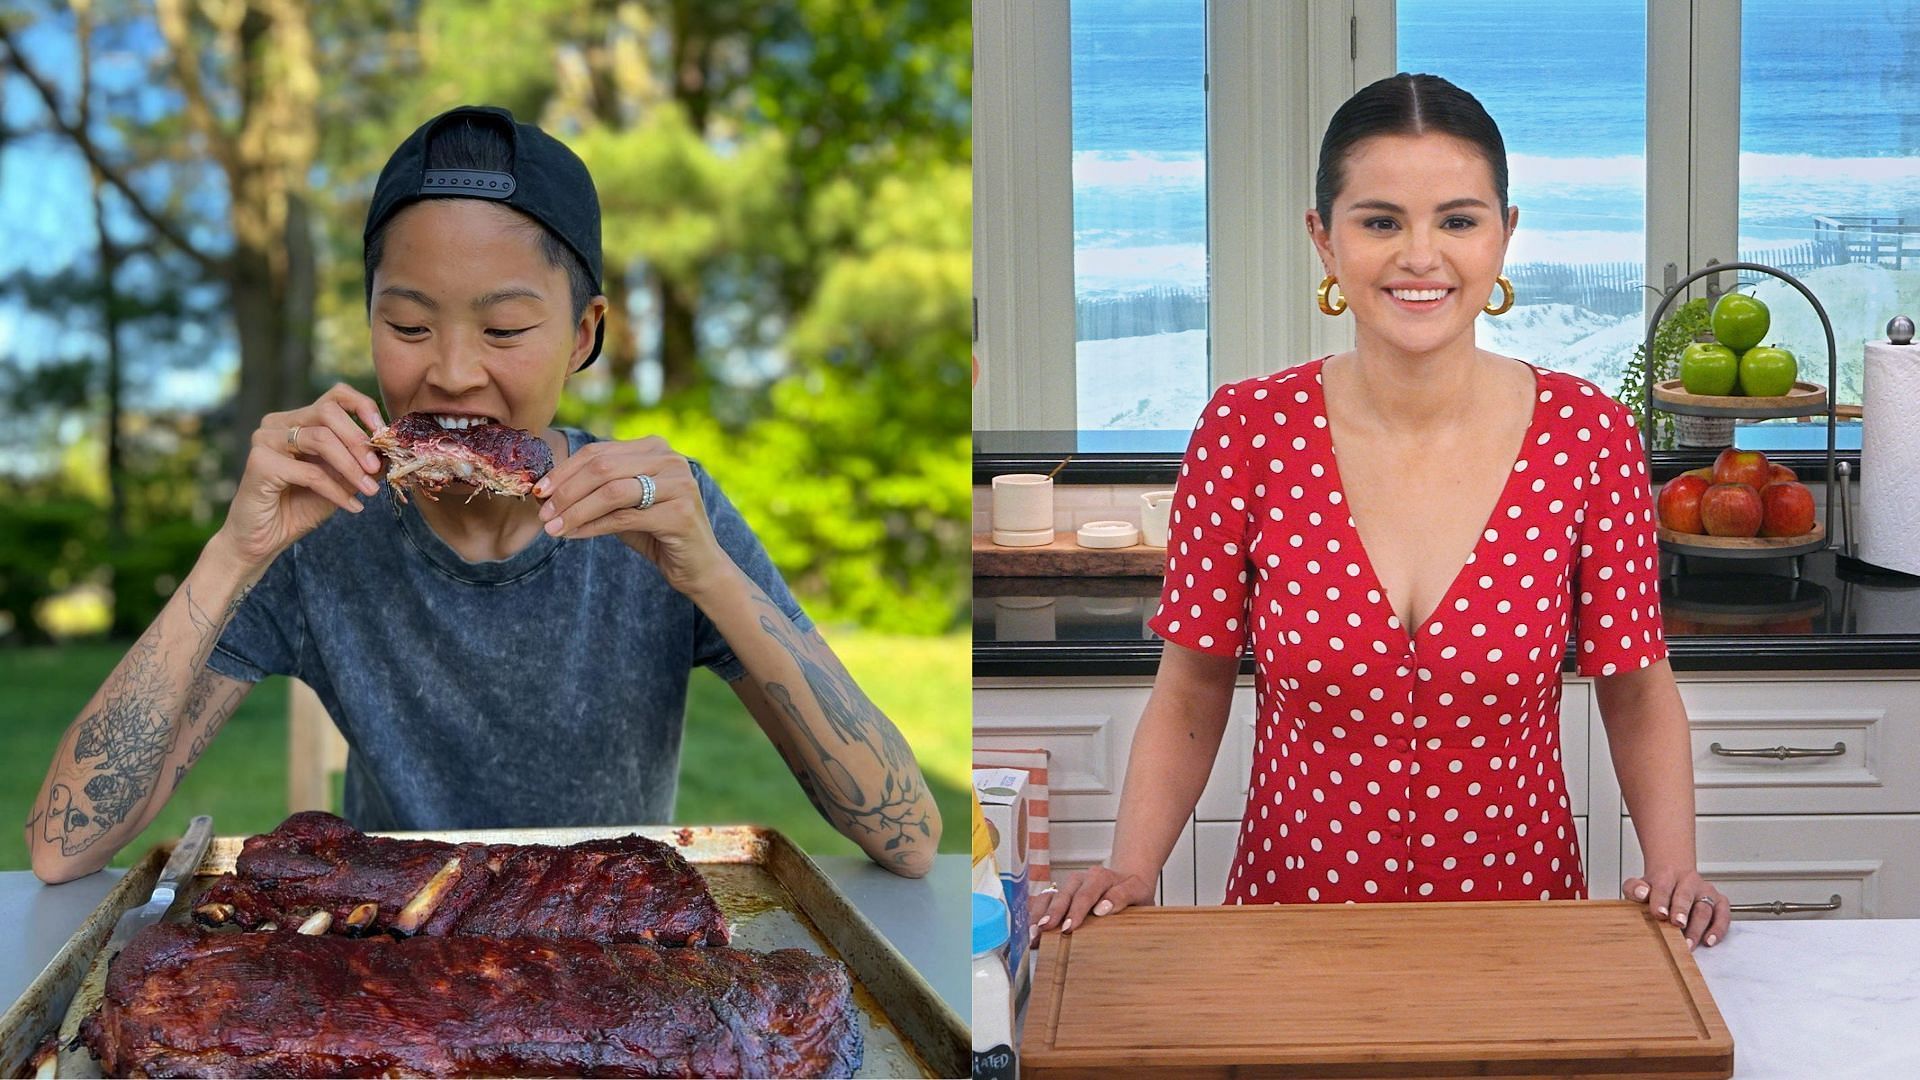 Selena + Chef to feature Kristen Kish (Image via Instagram/@kristenlkish/HBO Max)